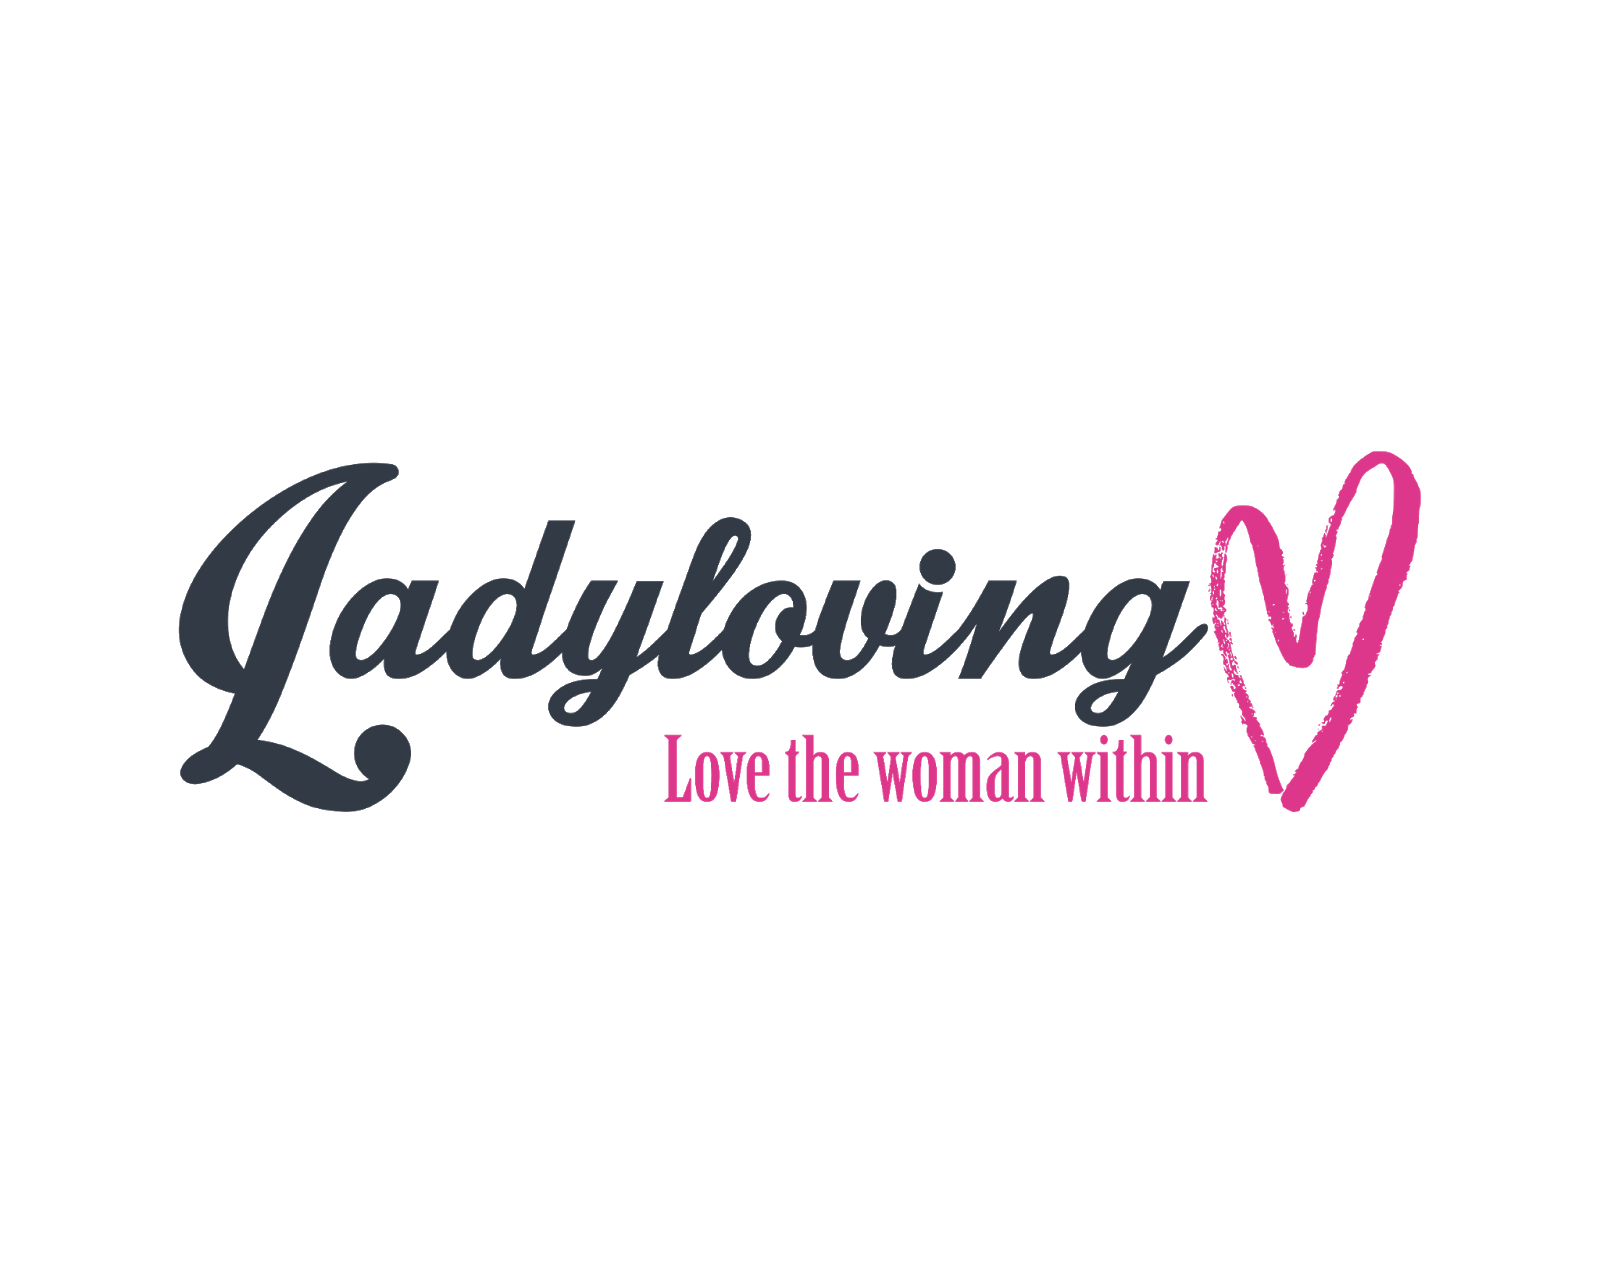 Ladyloving logo